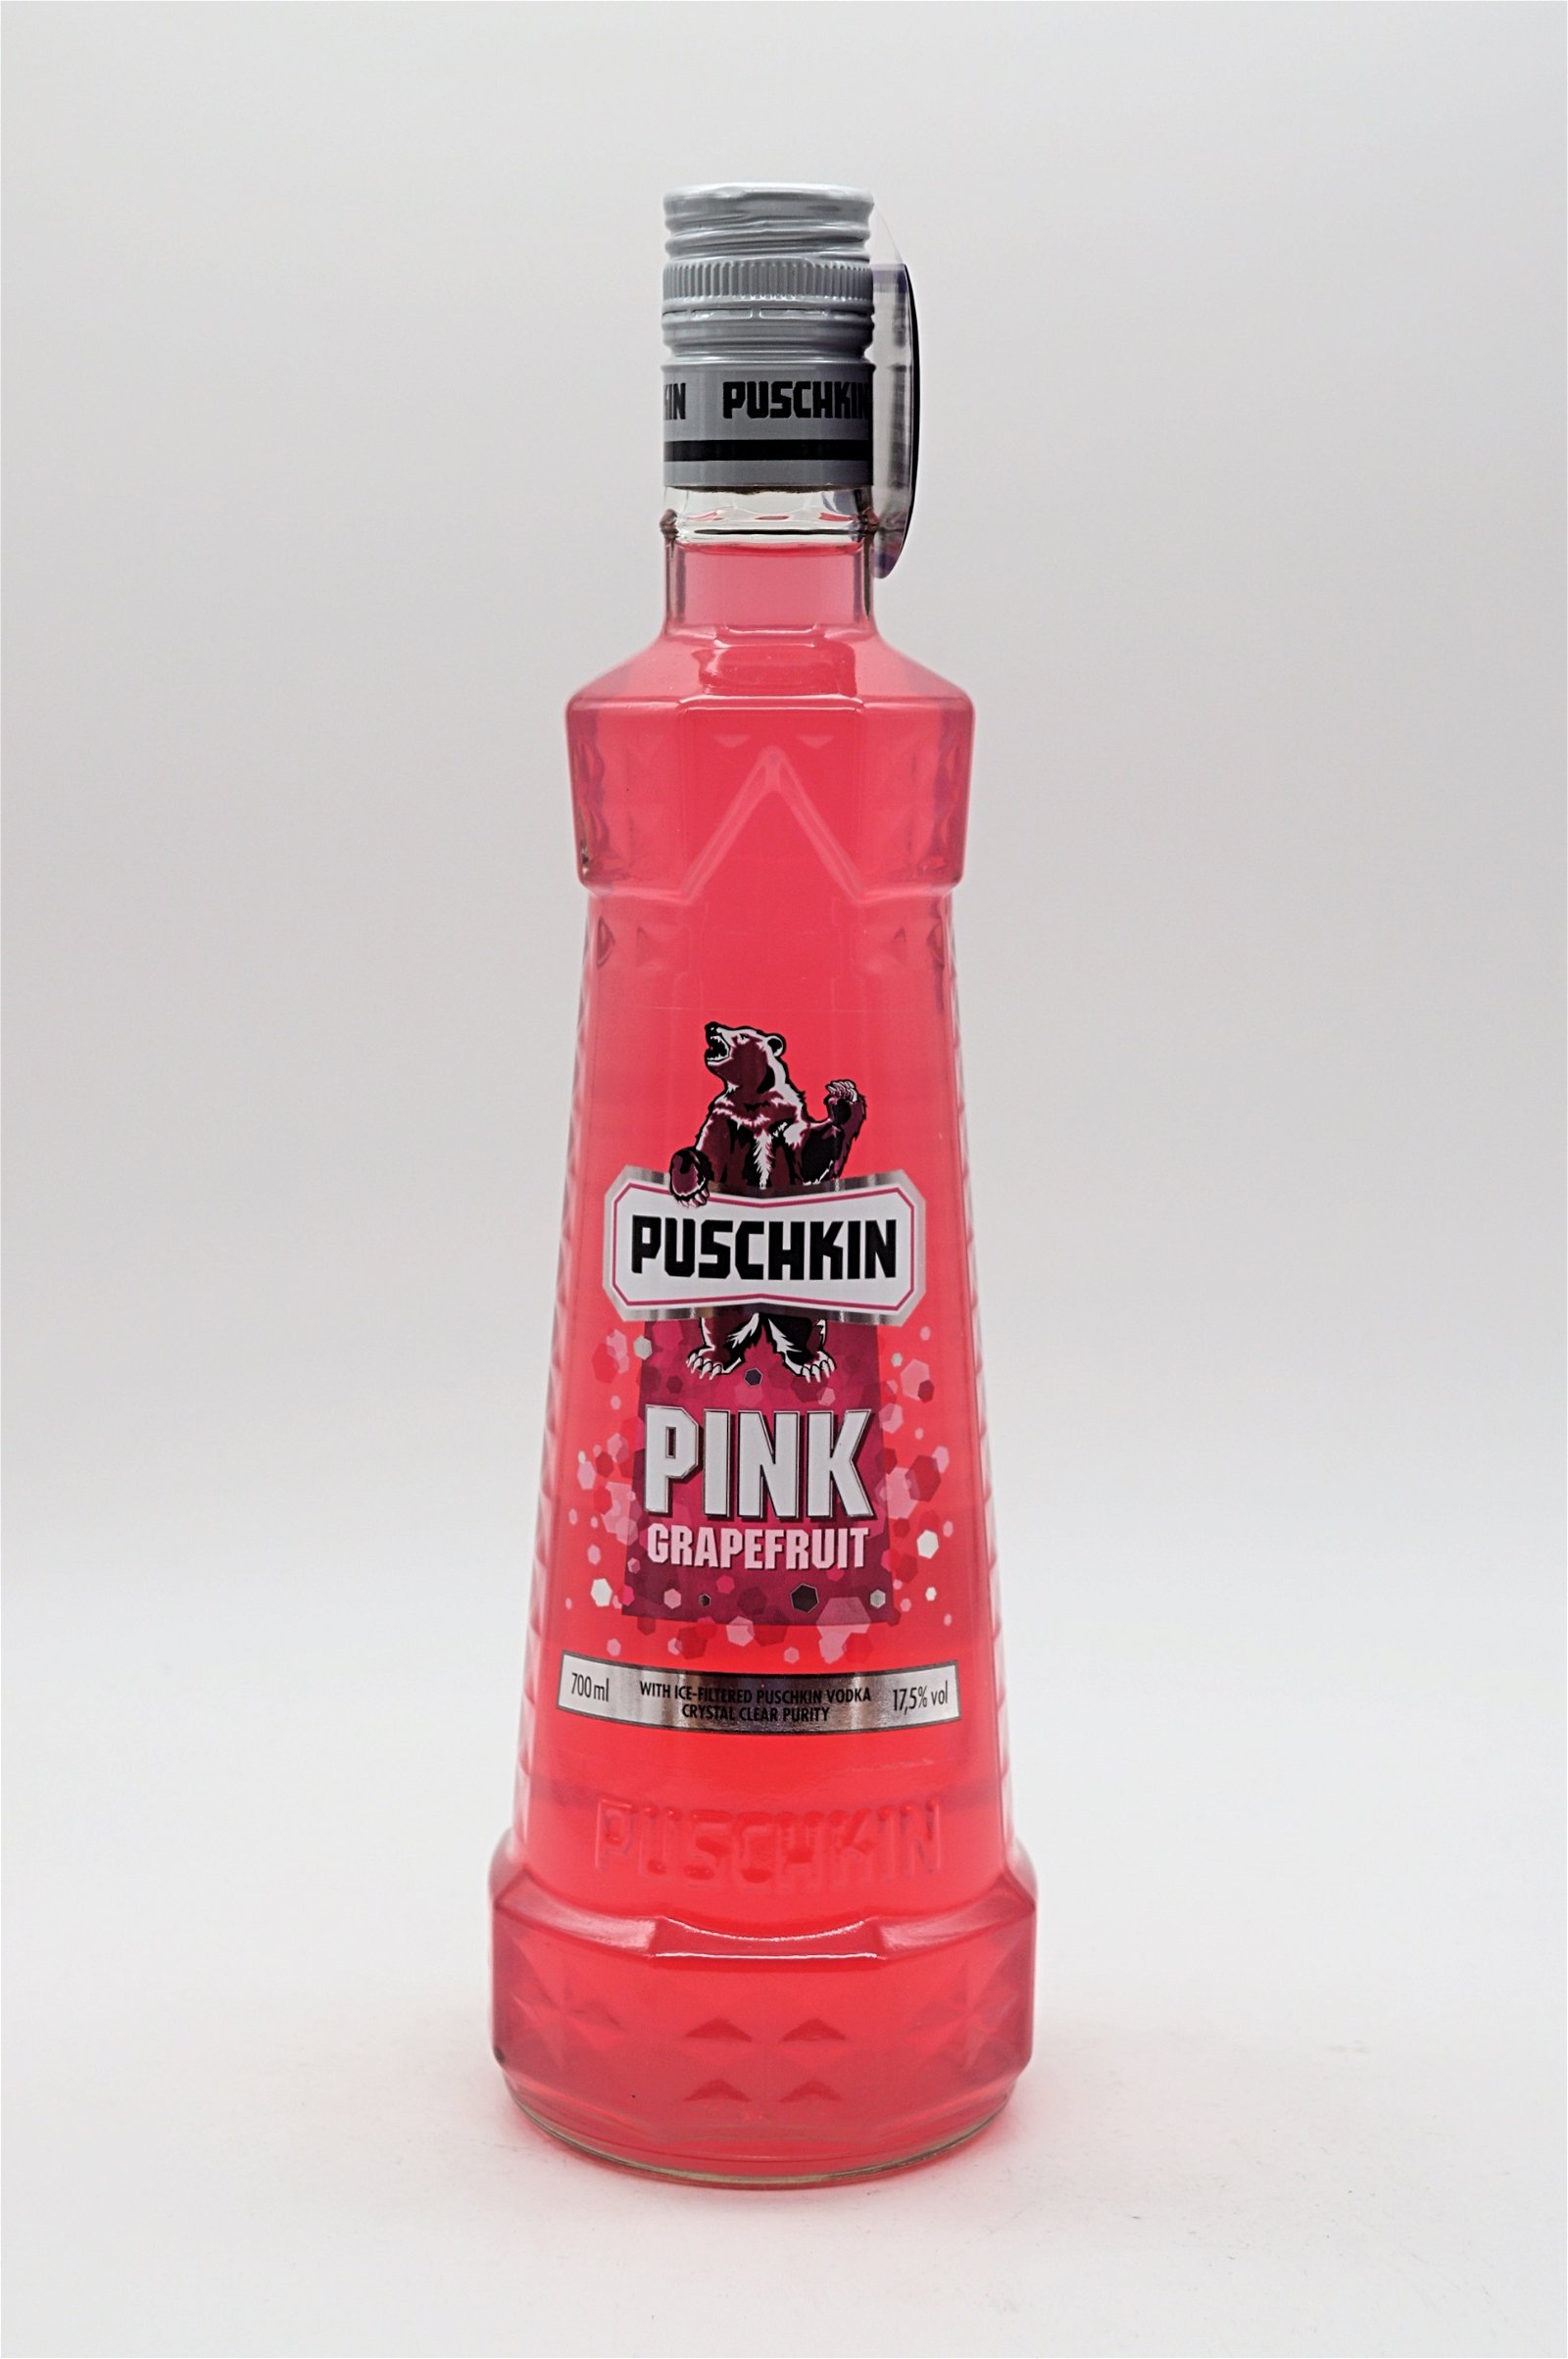 Puschkin Vodka Pink Grapefruit